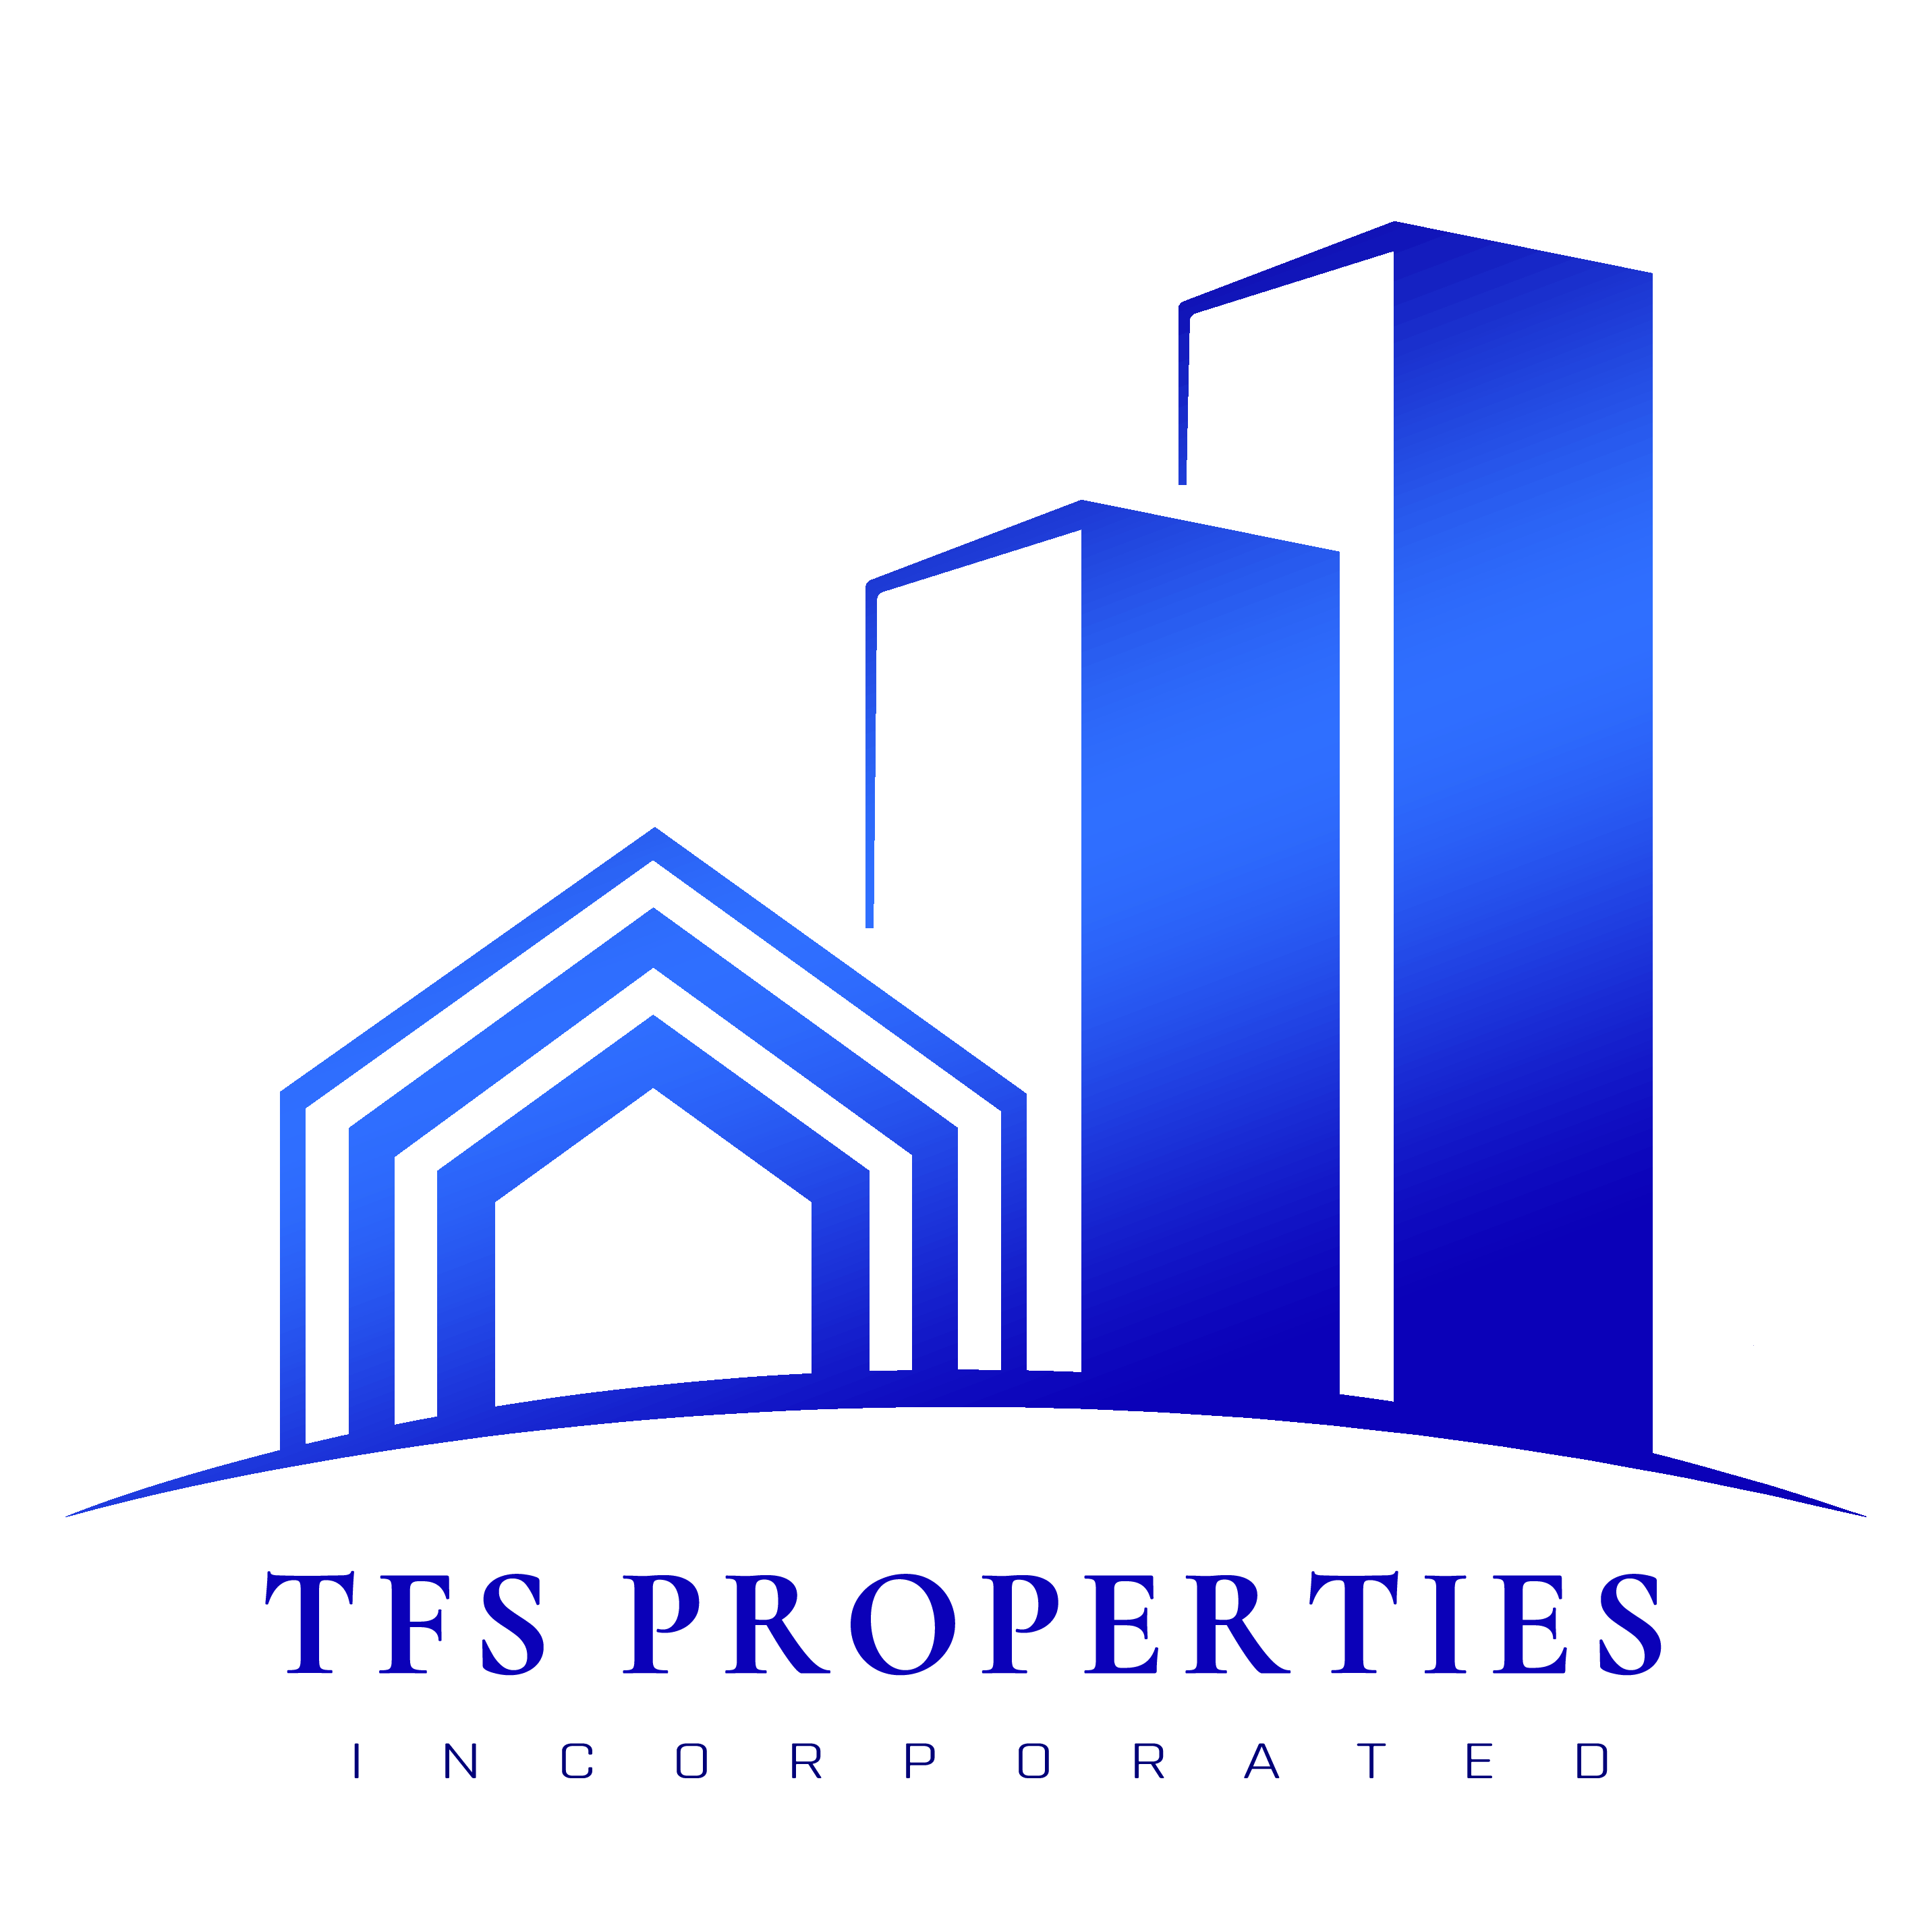 tfs properties